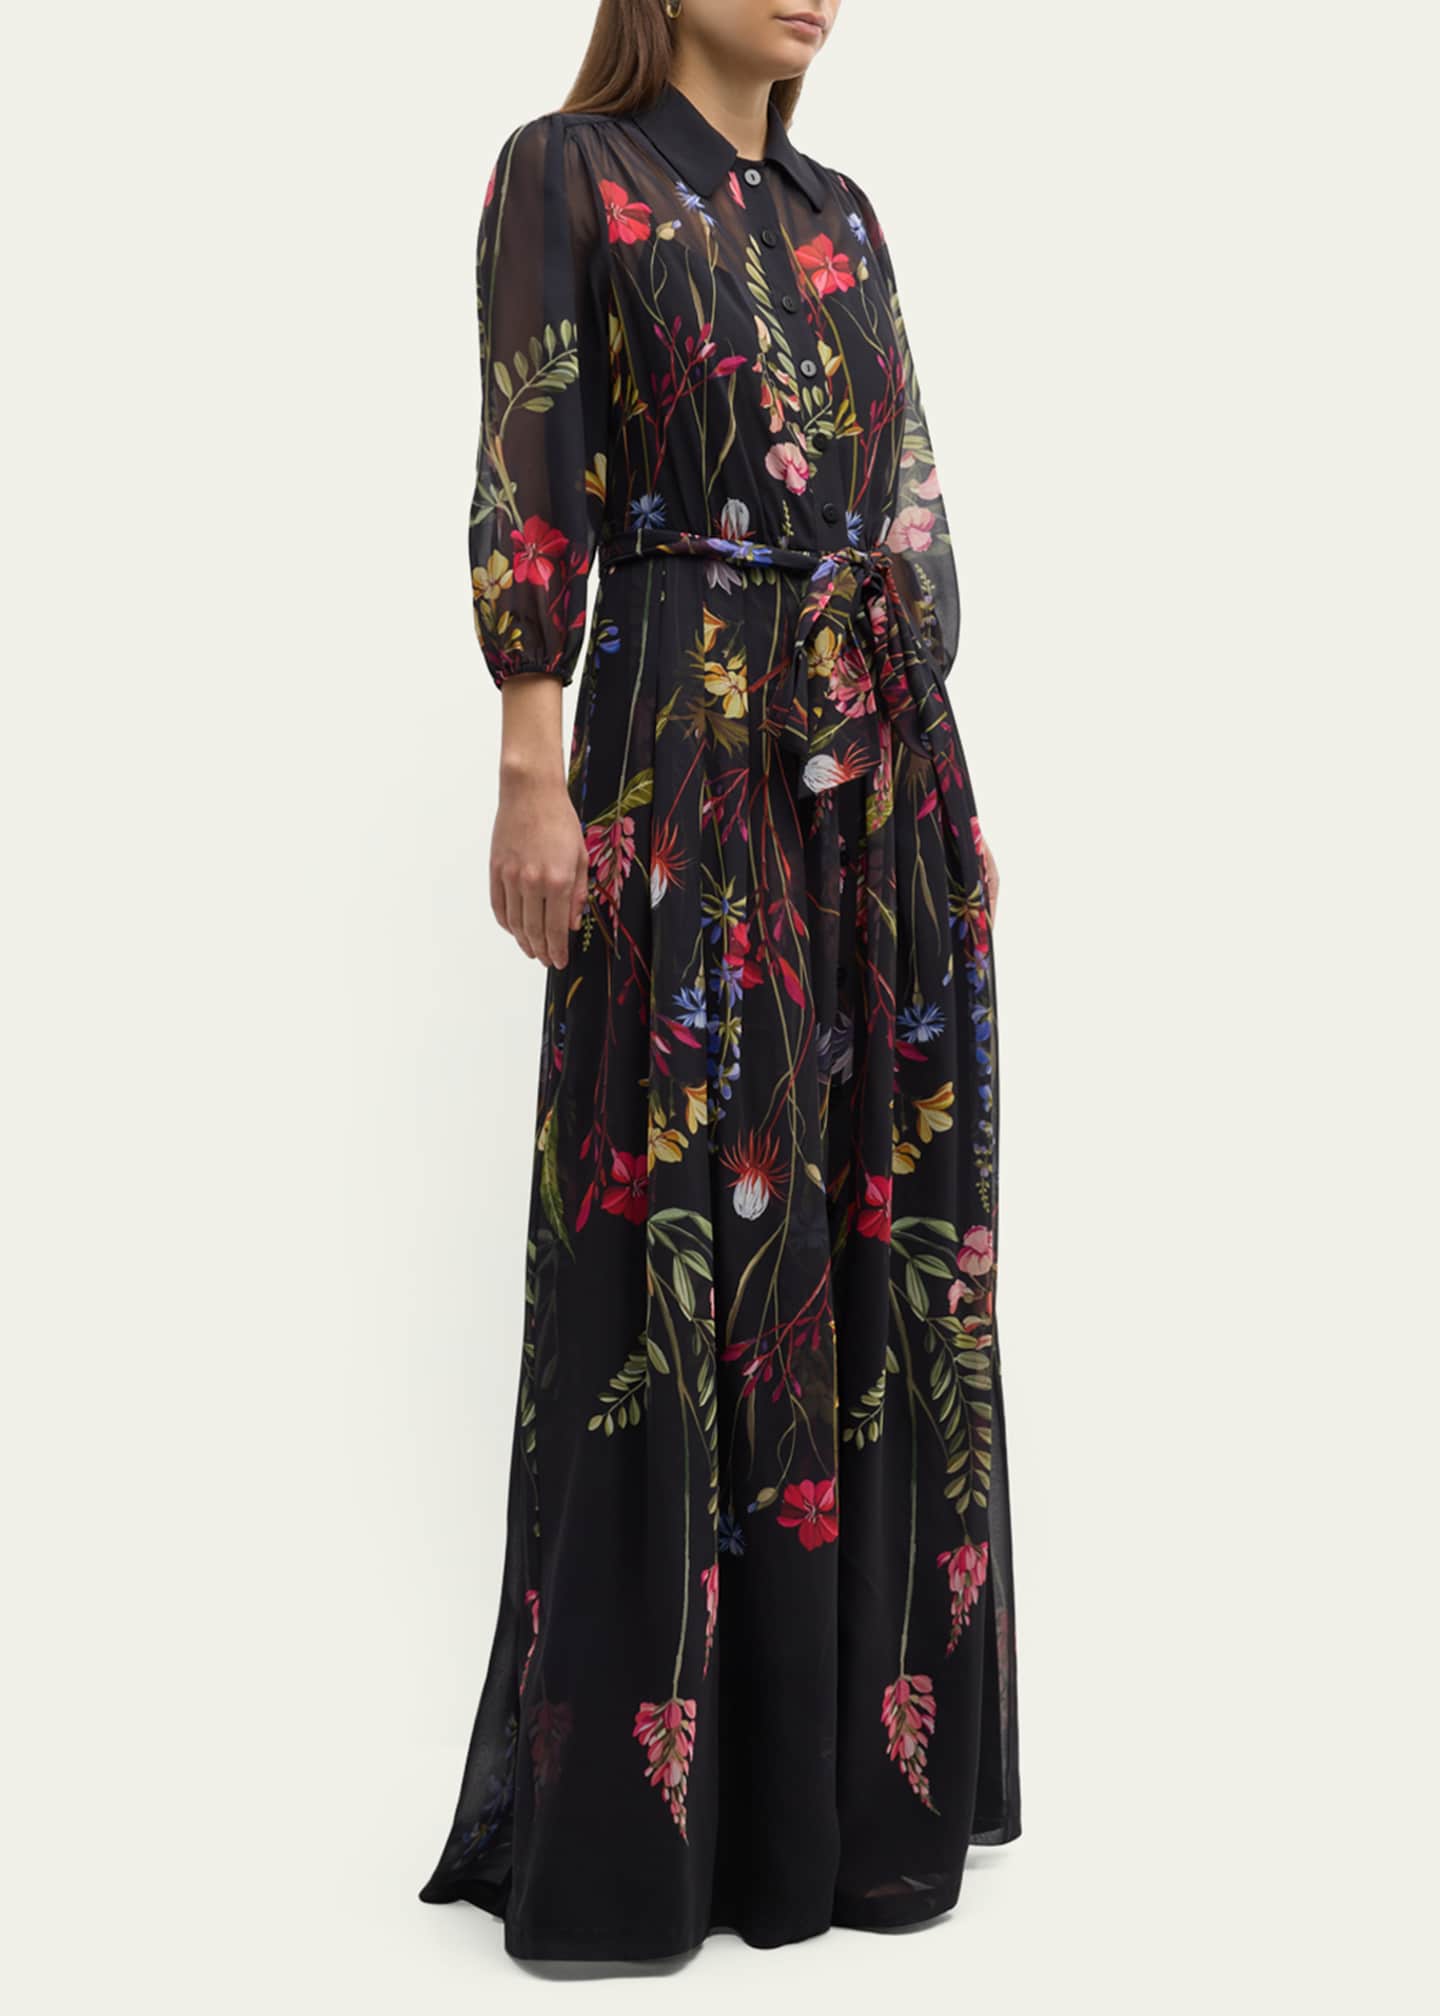 Rickie Freeman for Teri Jon Blouson-Sleeve Floral-Print Chiffon Shirt ...